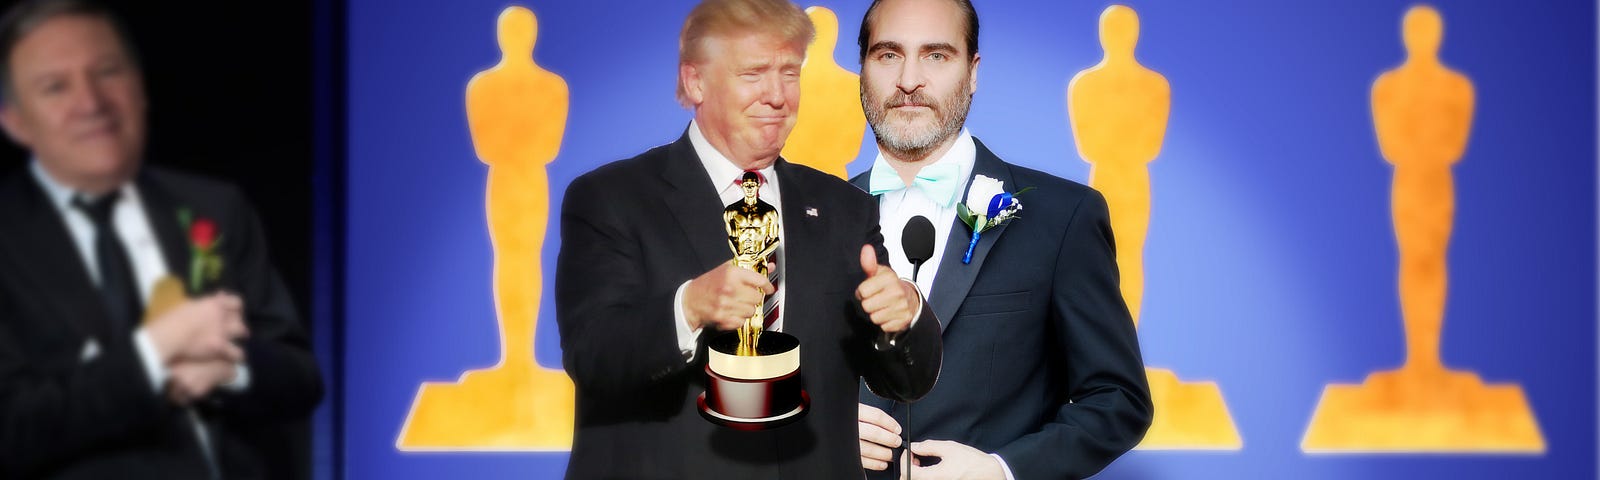 Trump standing next to Academy Award winner Joaquin Phoenix.